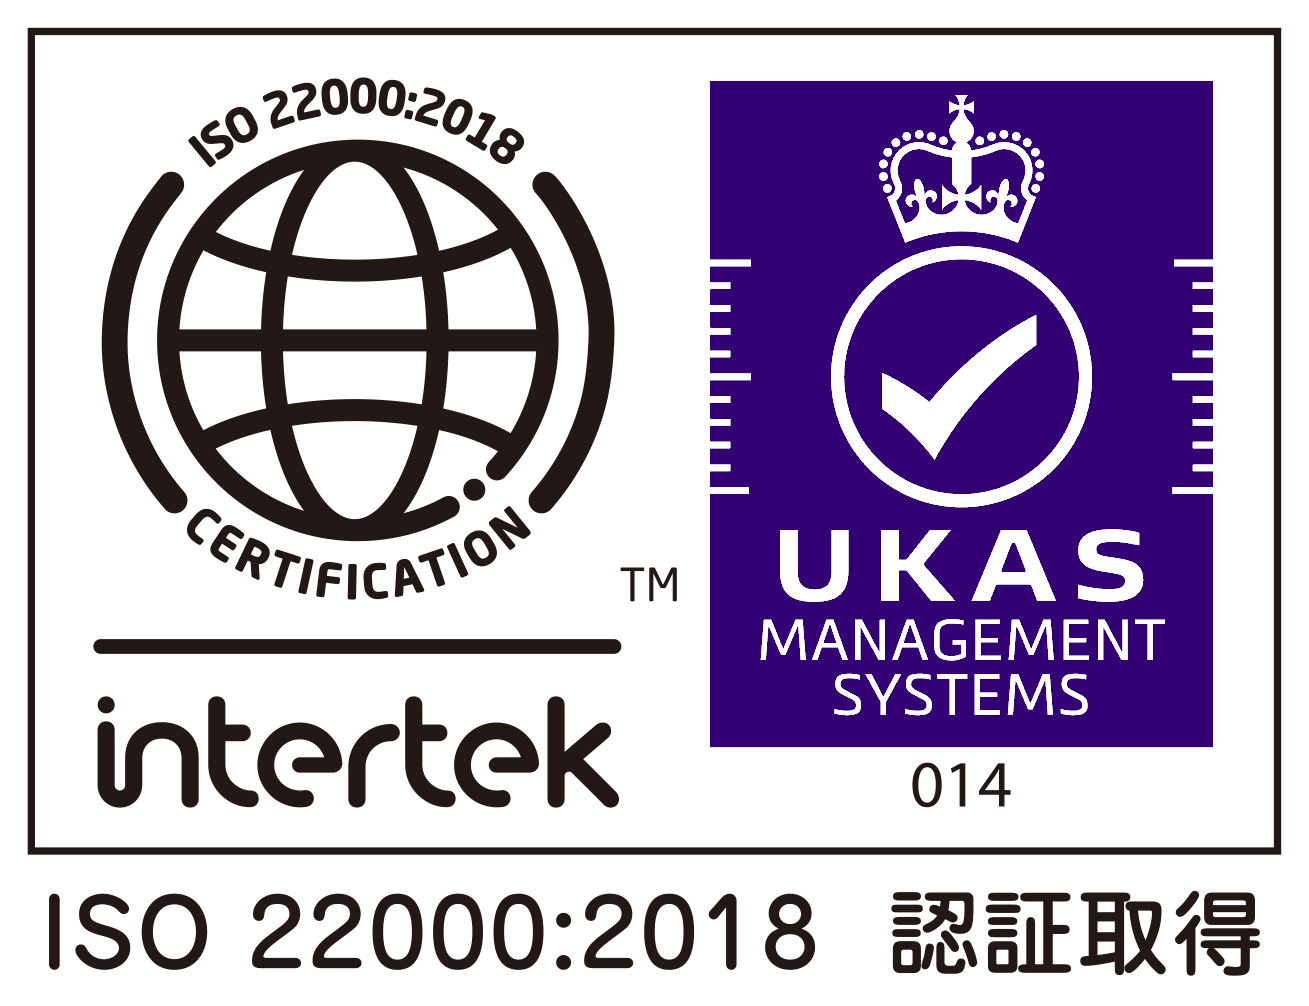 ISO 22000:2018 UKAS